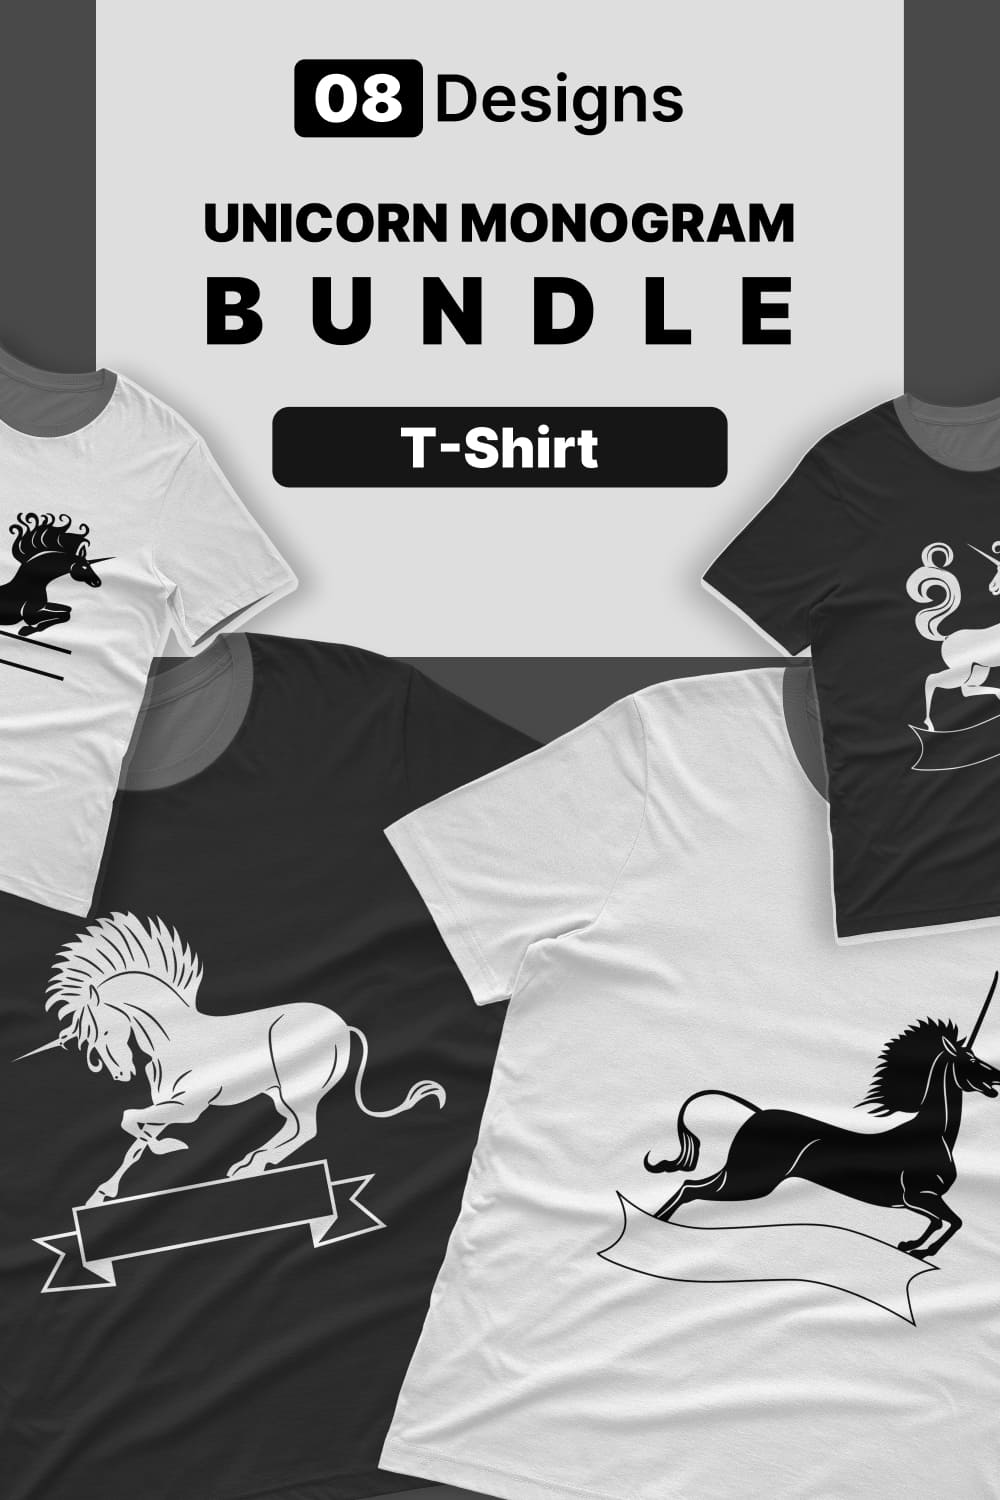 Unicorn Monogram T-shirt Designs Bundle - Pinterest.